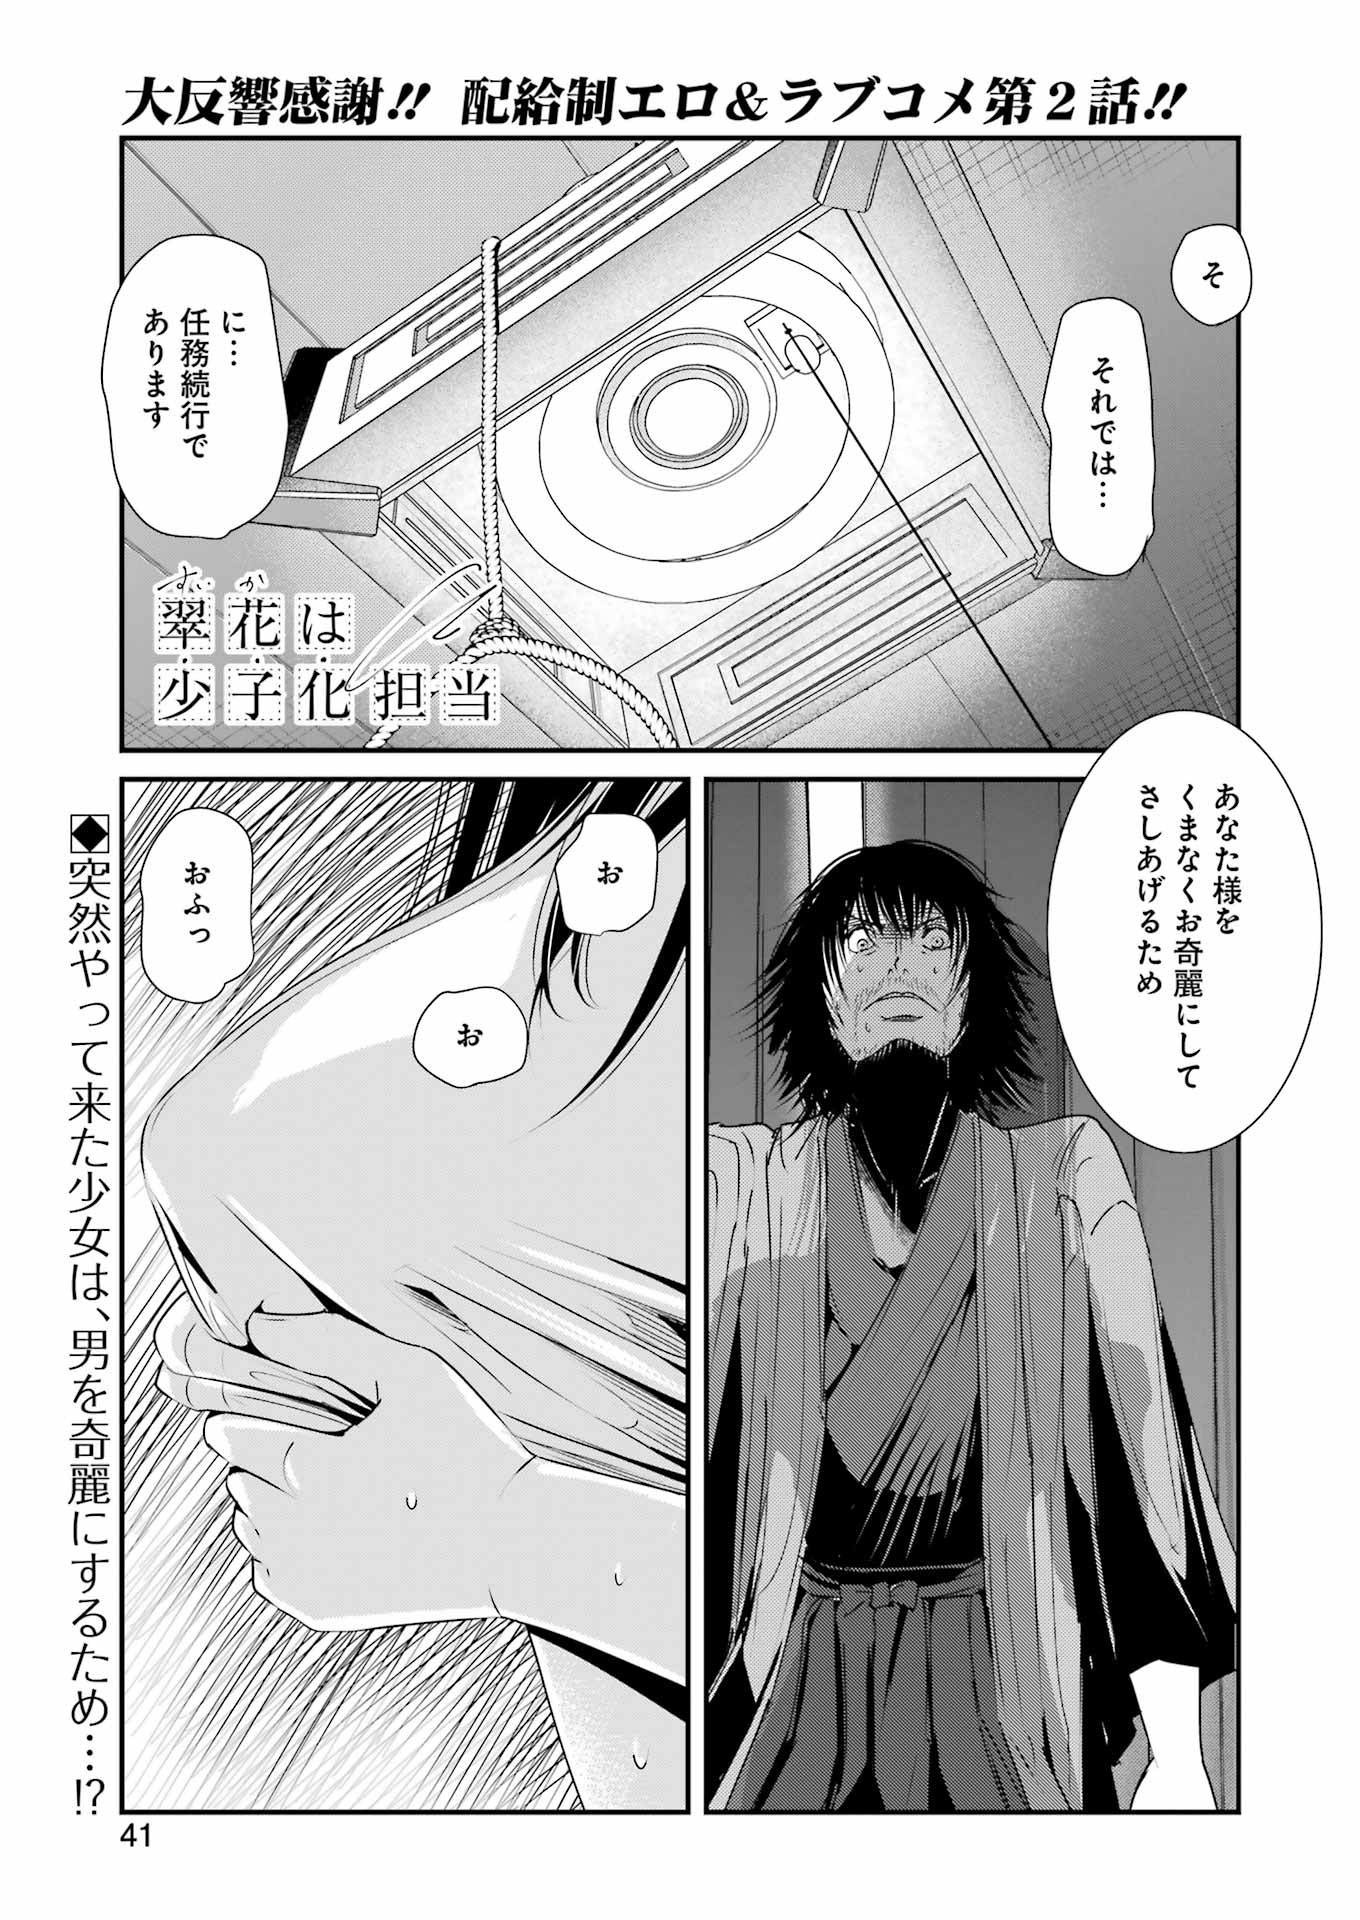 Suika wa Shoushika Tantou - Chapter 2 - Page 1